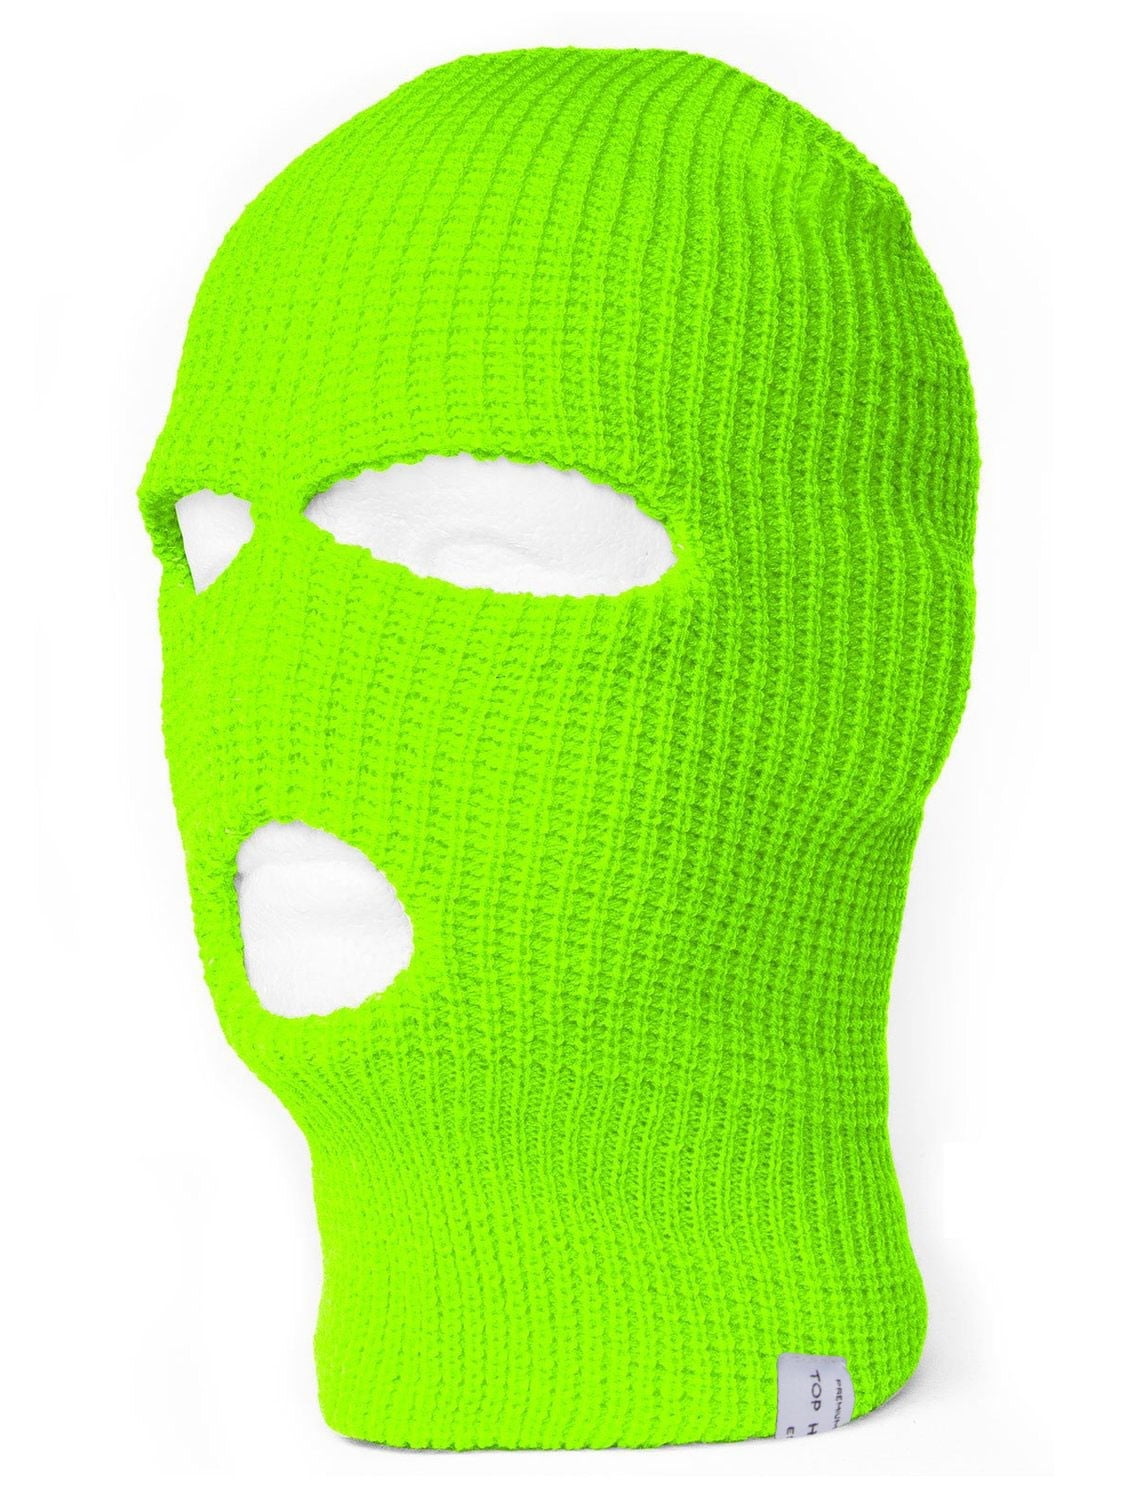 Download TopHeadwear - TopHeadwear 3-Hole Ski Face Mask Balaclava ...